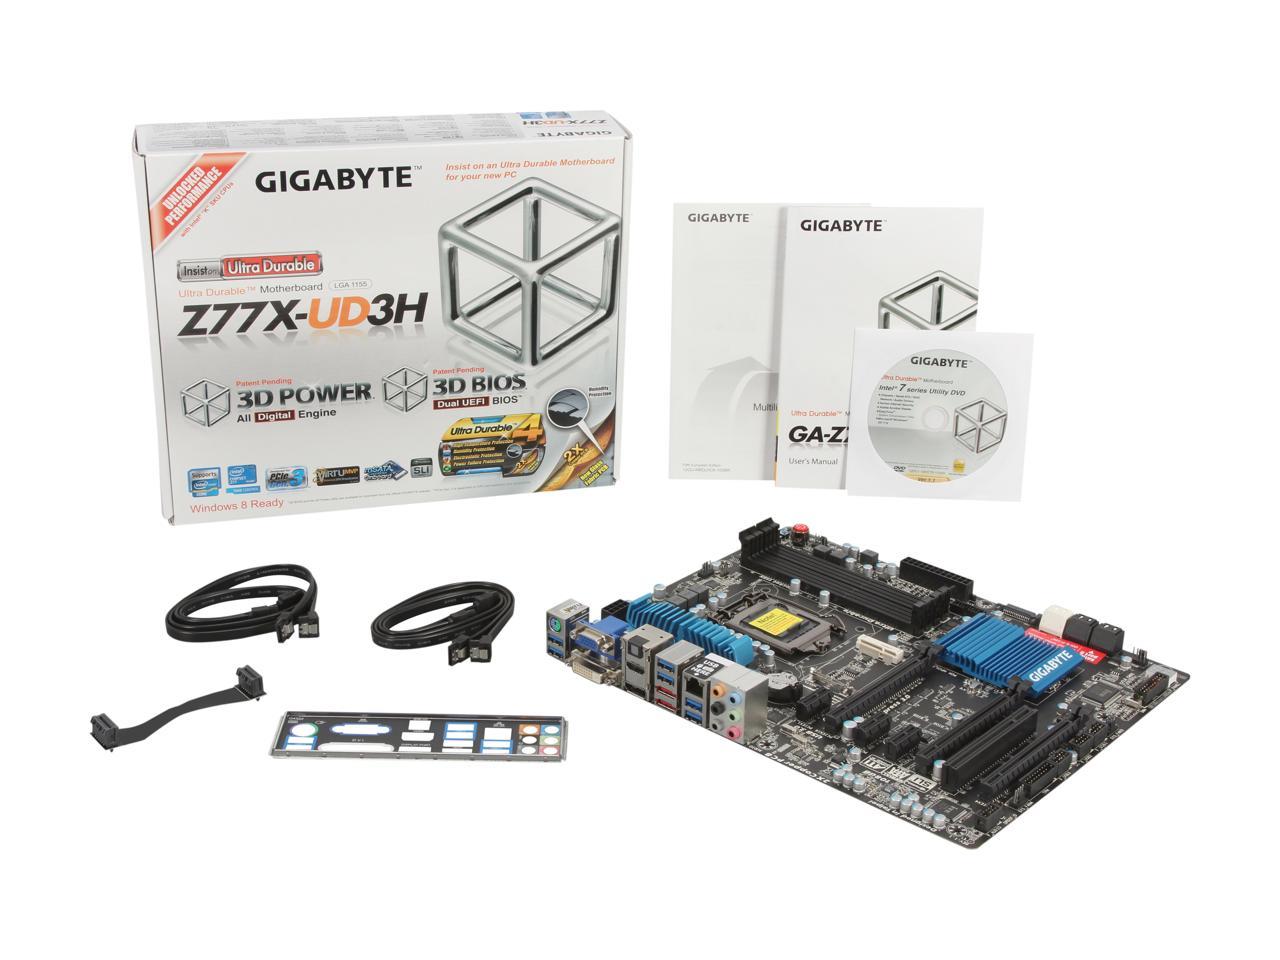 GIGABYTE GA-Z77X-UD3H LGA 1155 Intel Z77 HDMI SATA 6Gb/s USB 3.0 ATX Intel  Motherboard